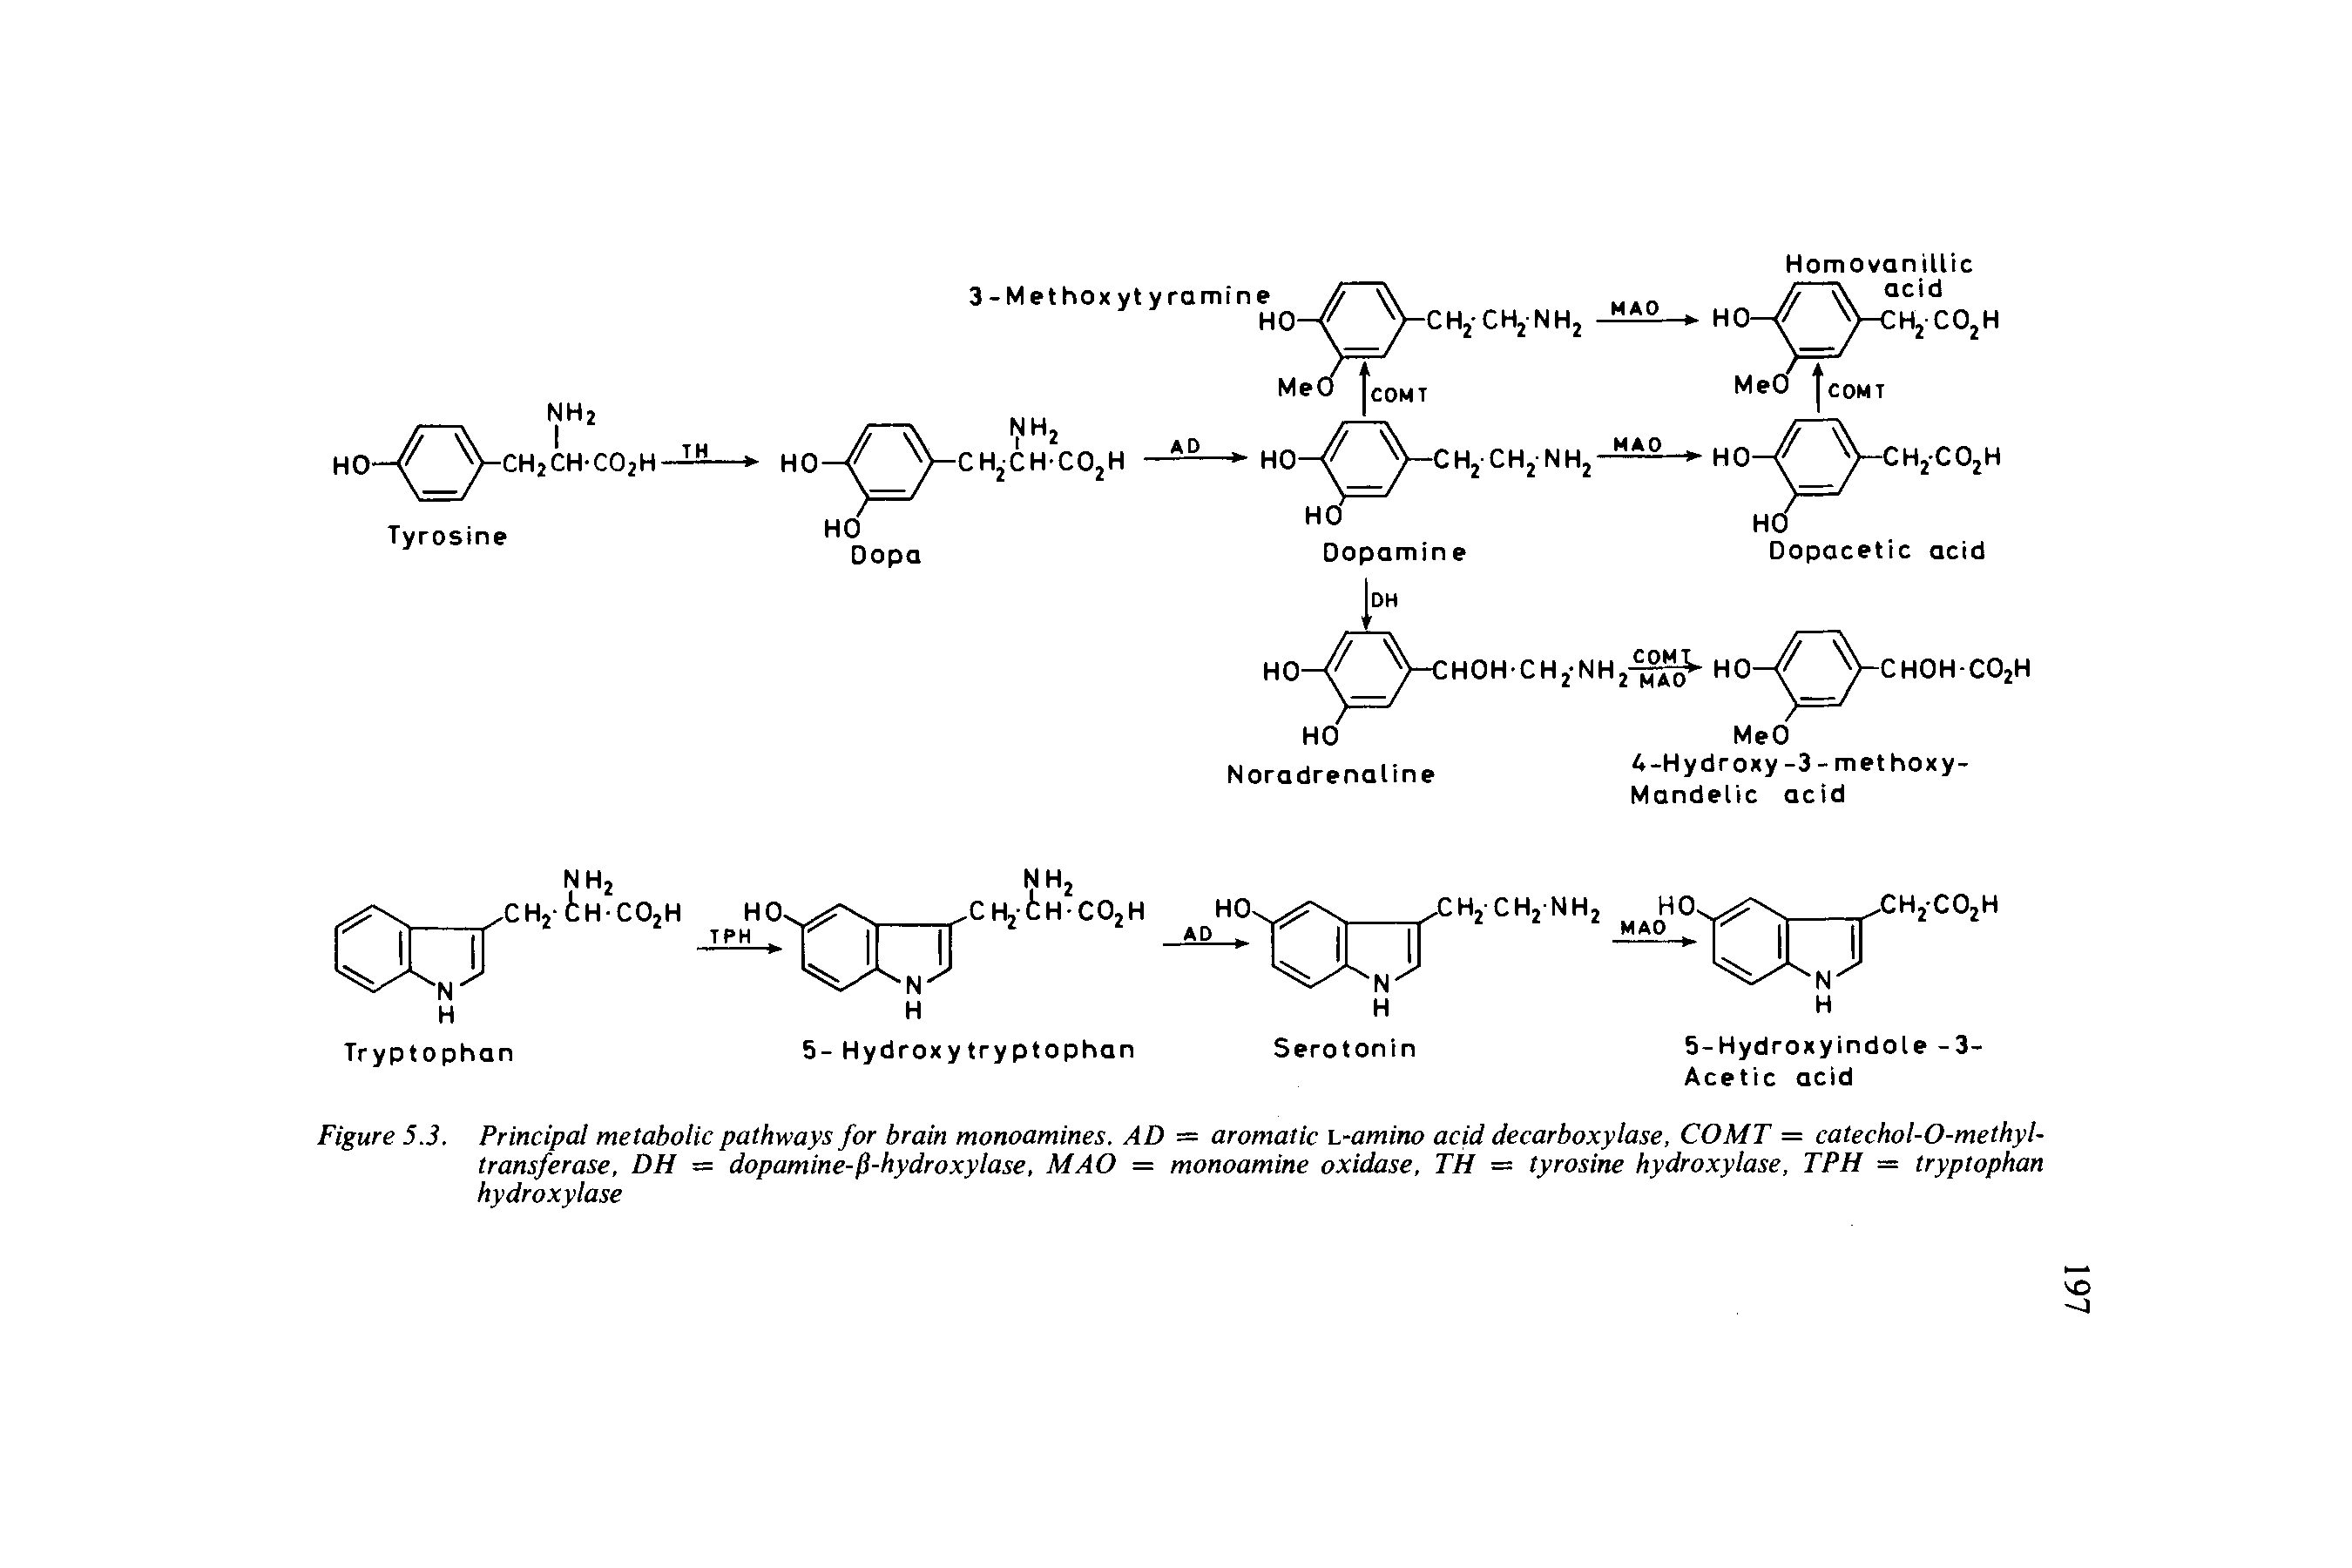 Figure 5.3. Principal metabolic pathways for brain monoamines. AD = aromatic L-amino acid decarboxylase, COMT = catechol-O-methyl-transferase, DH = dopamine-p-hydroxylase, MAO = monoamine oxidase, TH — tyrosine hydroxylase, TPH = tryptophan hydroxylase...